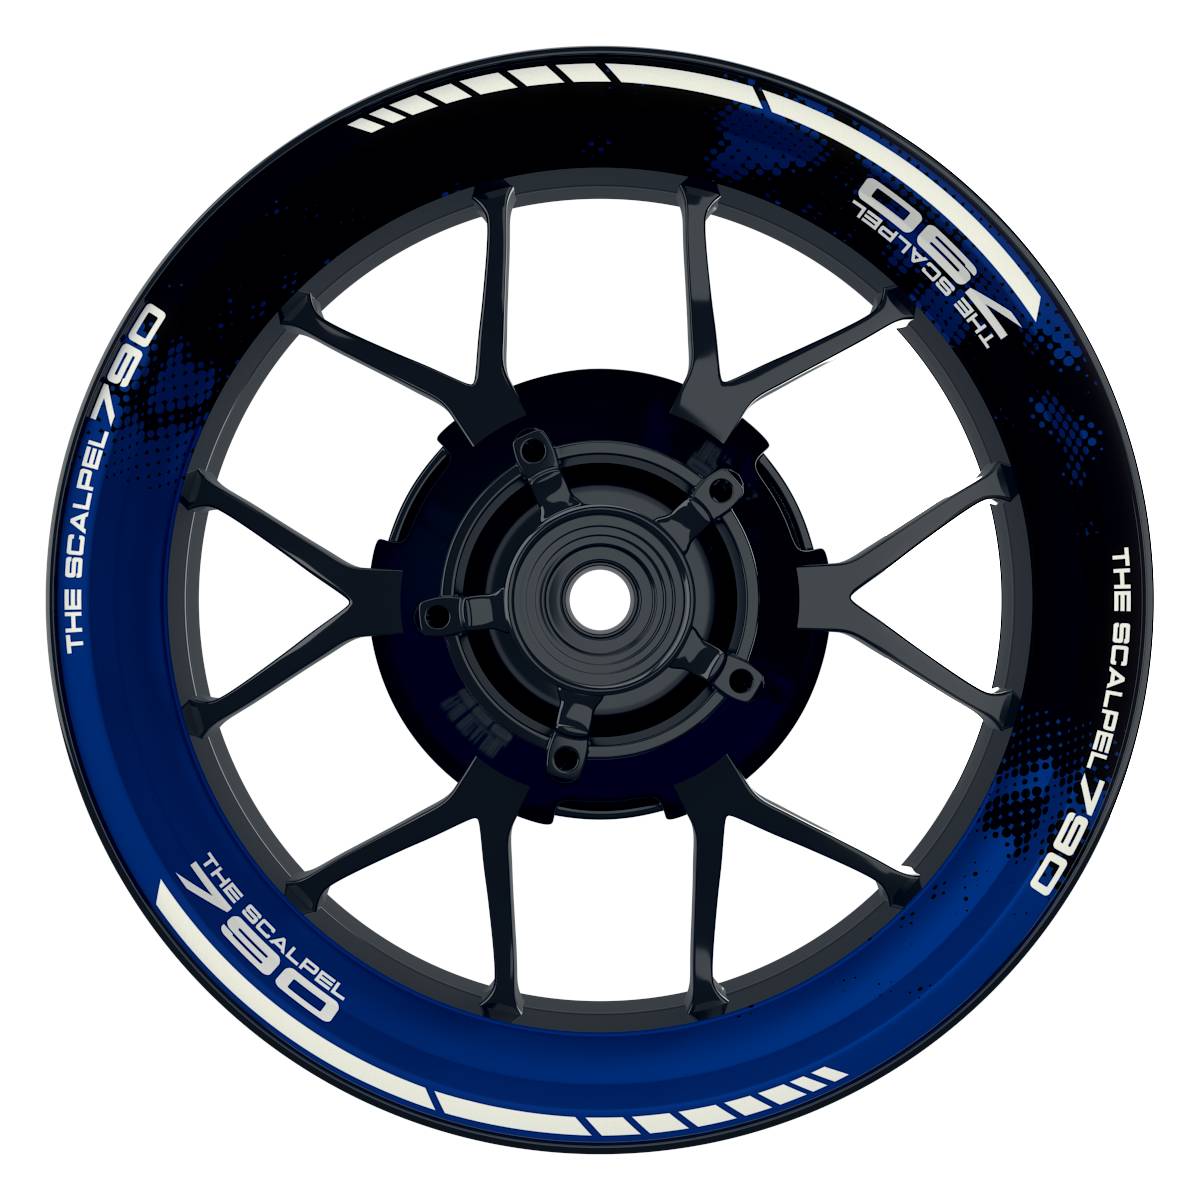 THE SCALPEL 790 Dots schwarz blau Wheelsticker Felgenaufkleber